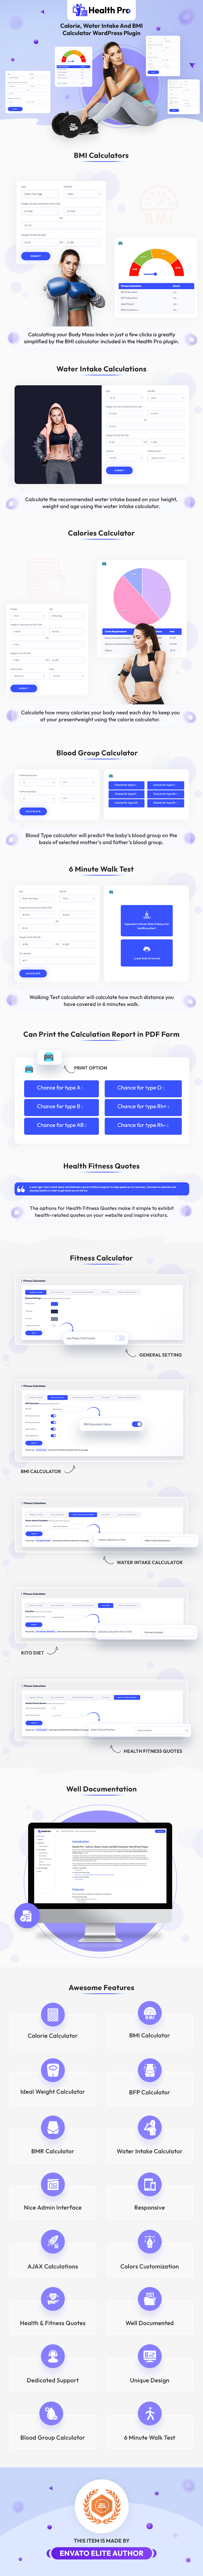 Health Pro - Calorie, Water Intake and BMI Calculator WordPress Plugin - 1